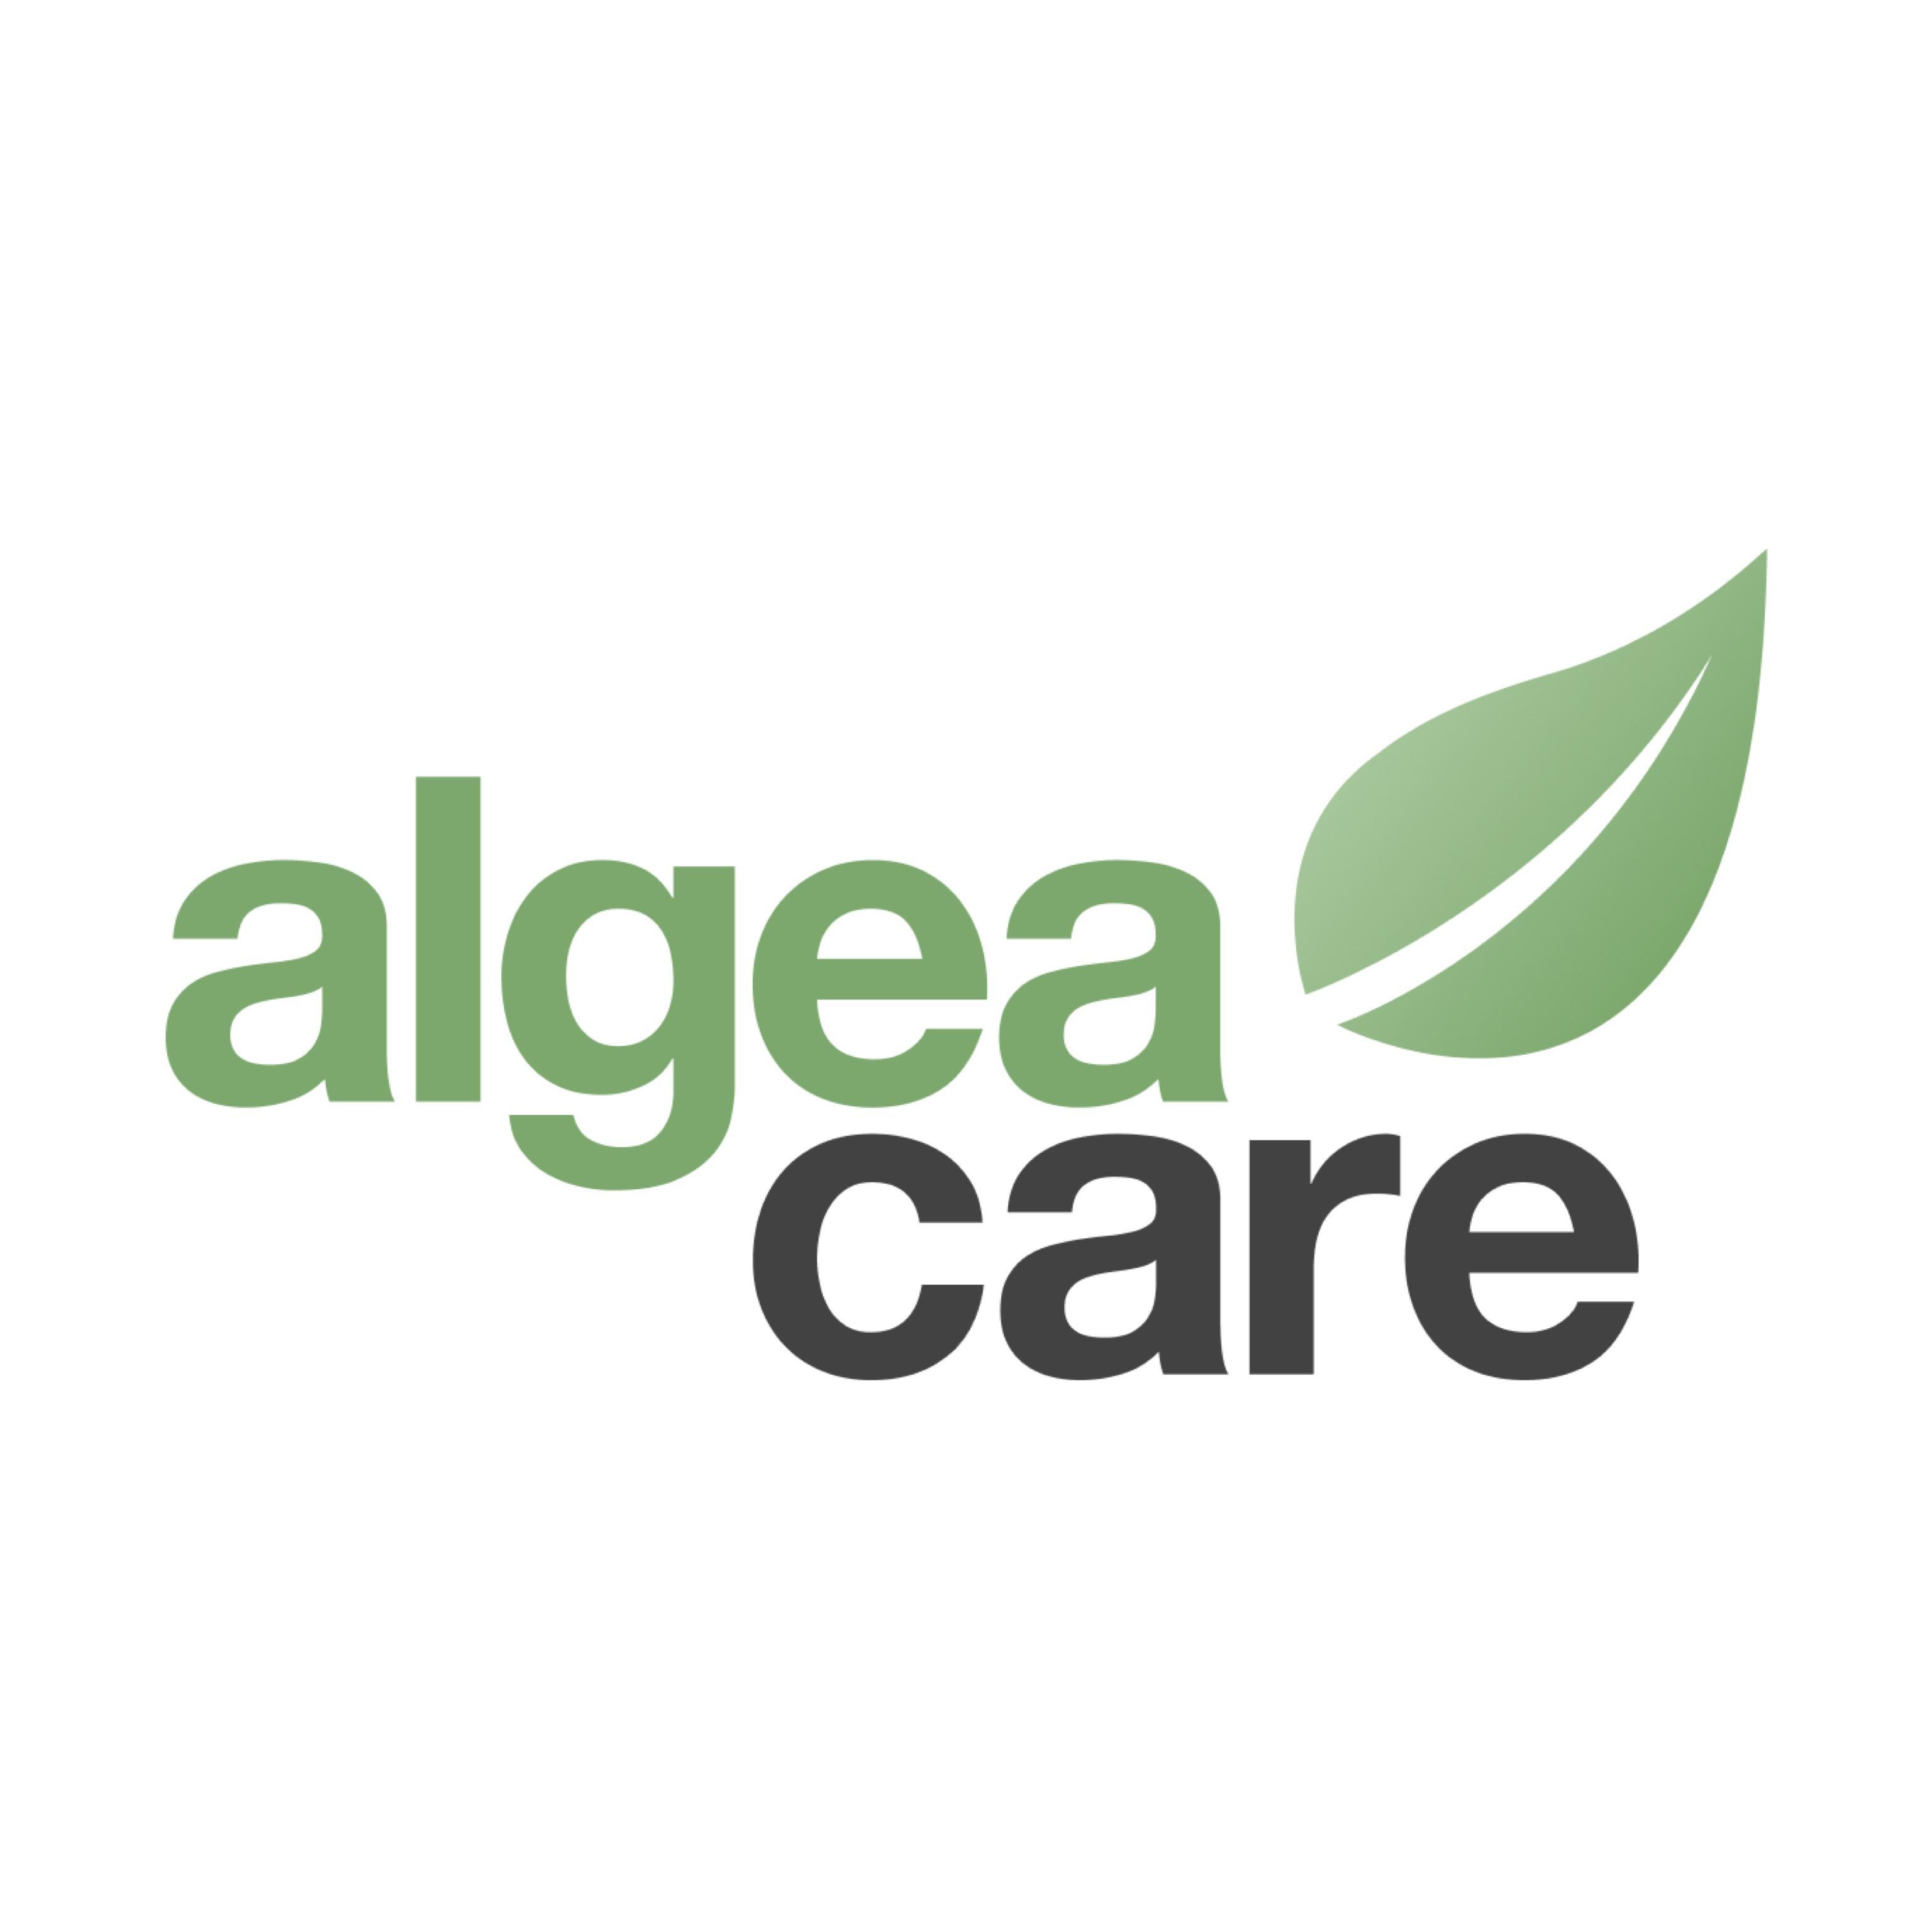 Algea Care Therapiezentrum München in München - Logo